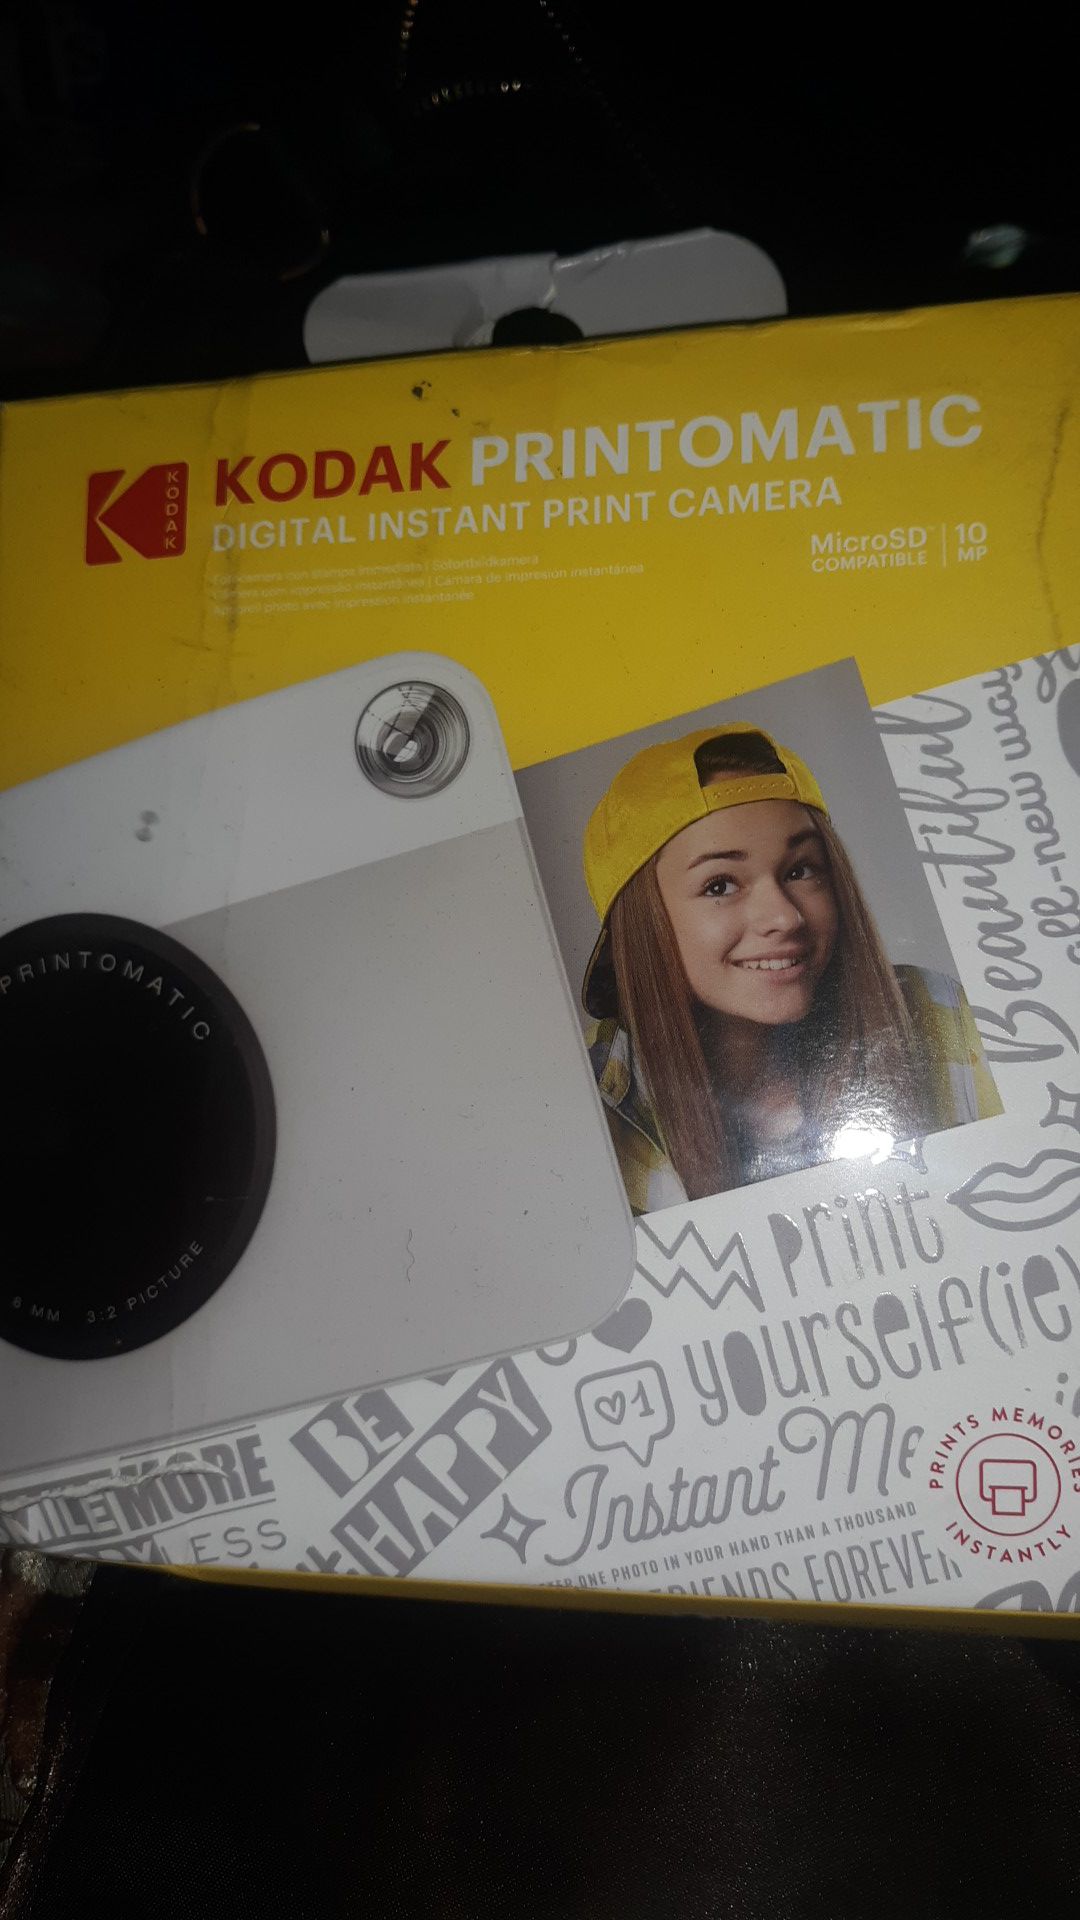 Kodak printomatic